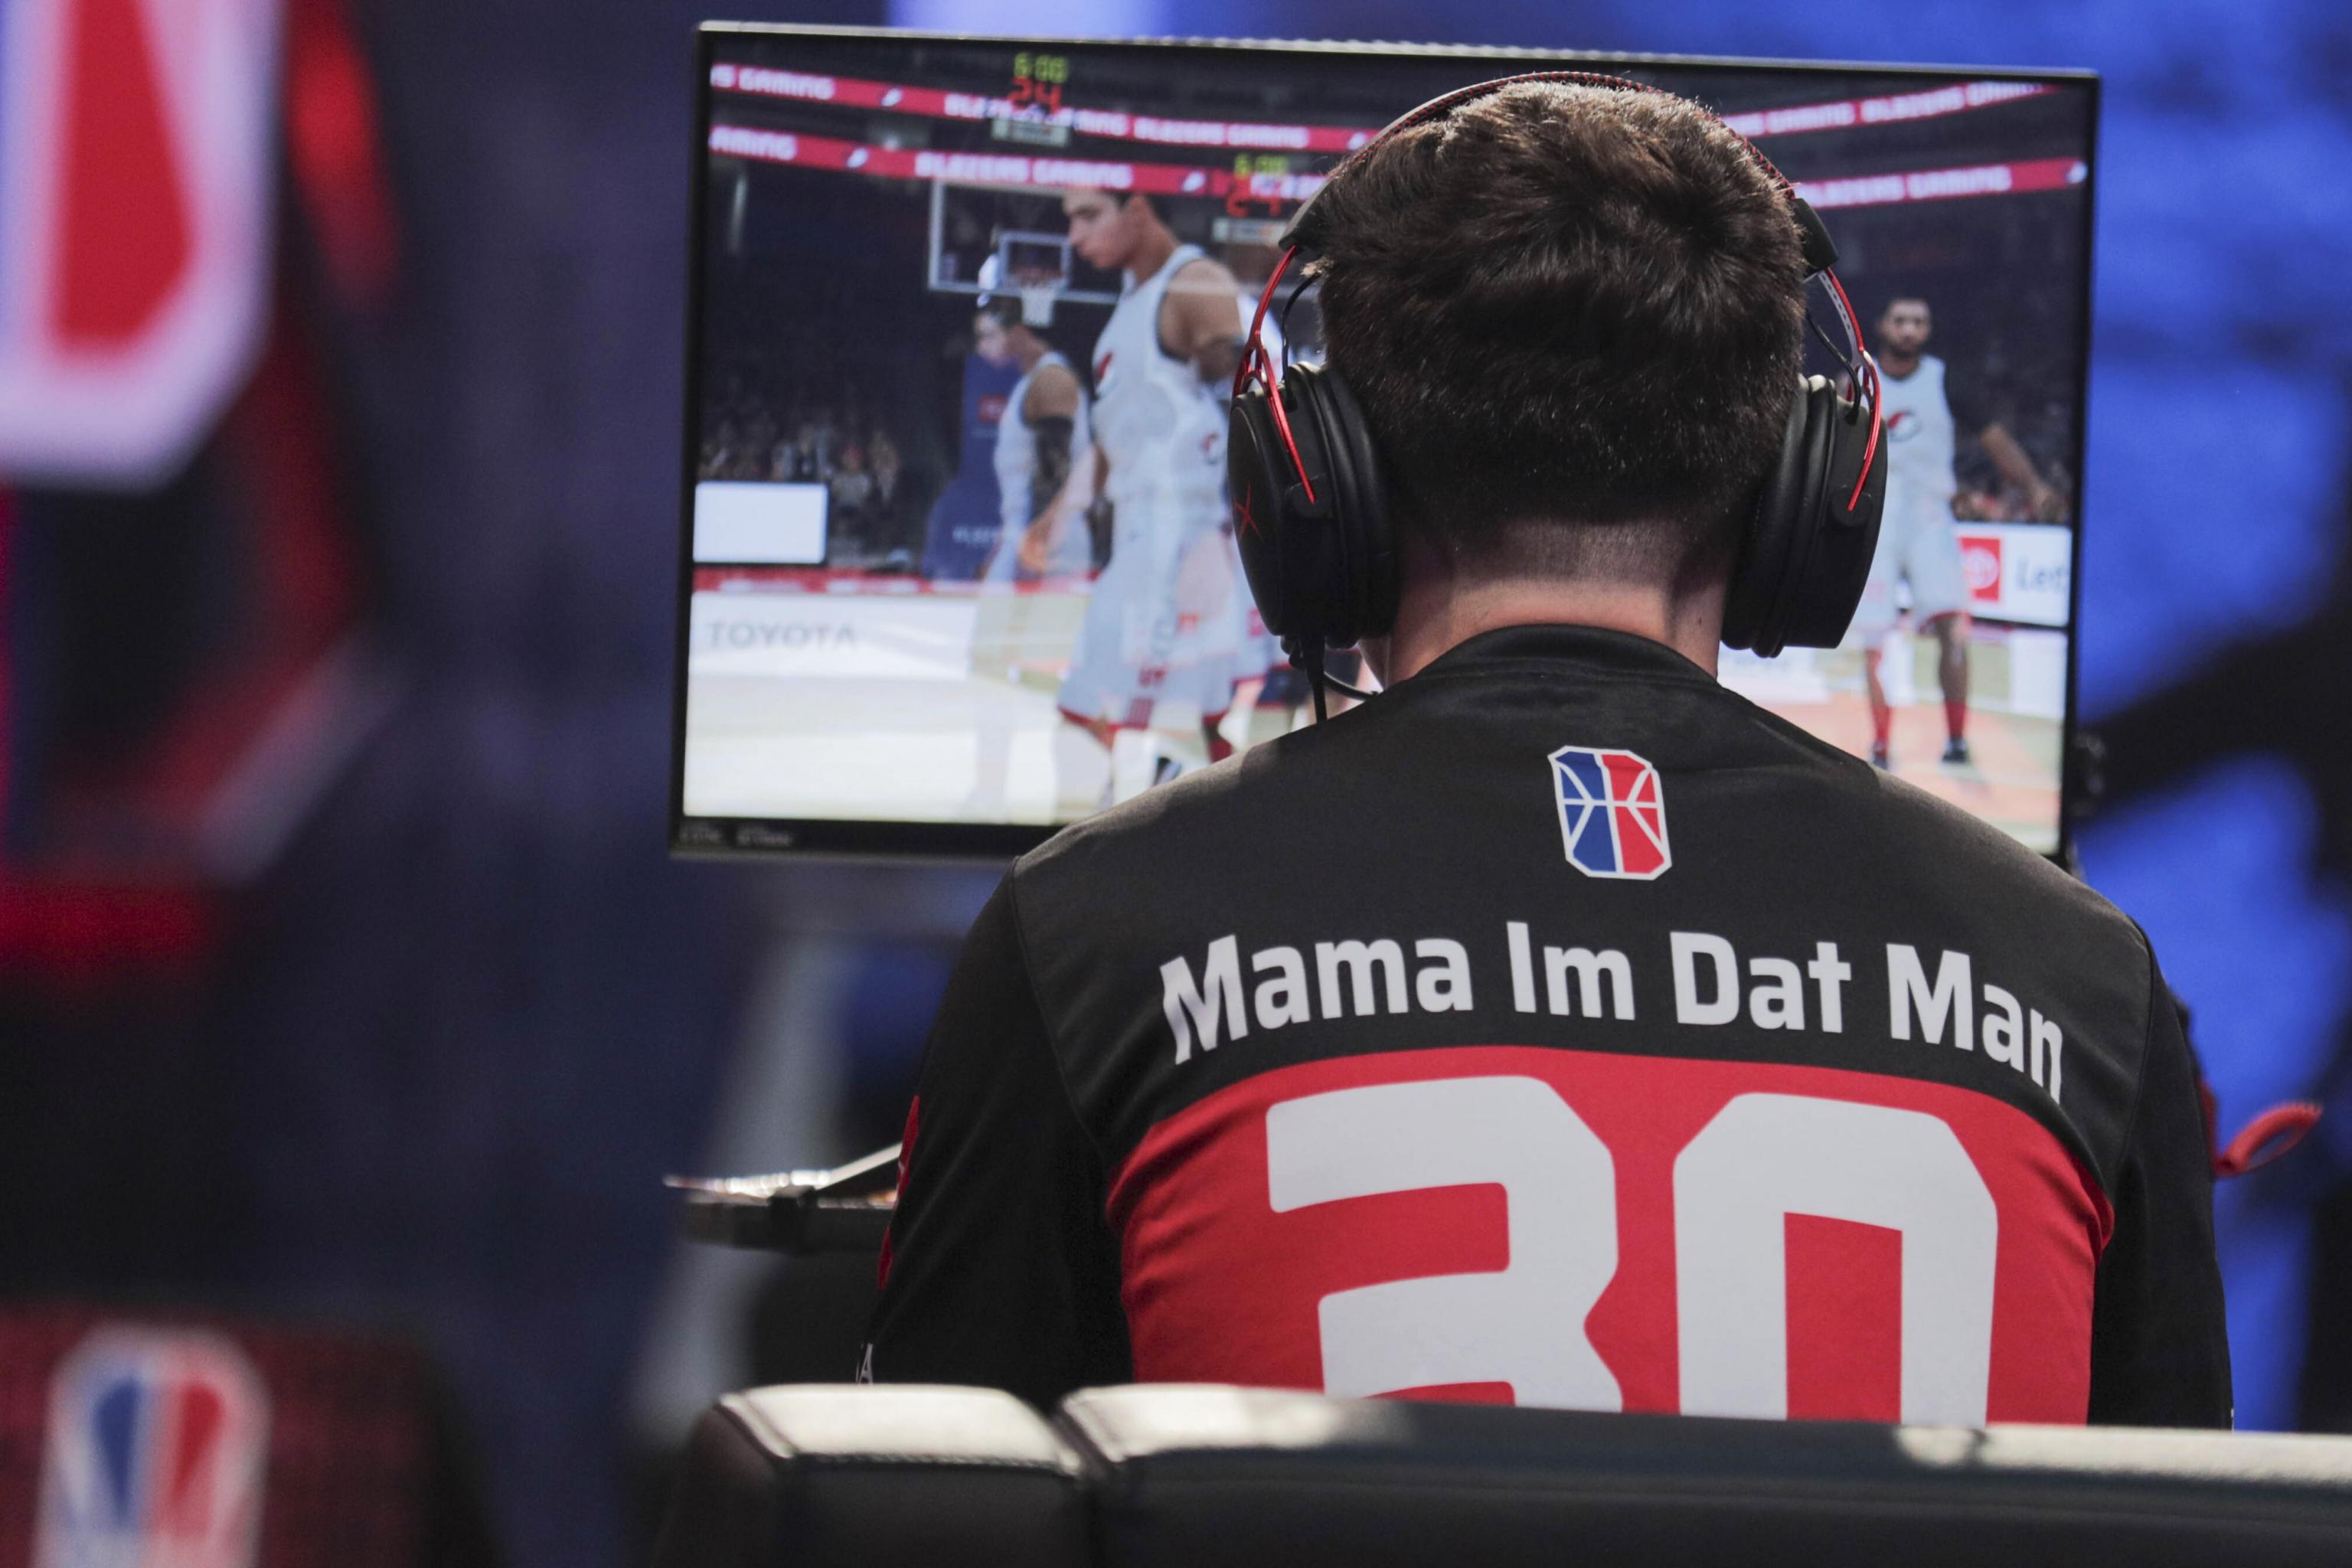 Mavs Gaming Fills Out Its Roster At The 2020 NBA 2K League Draft